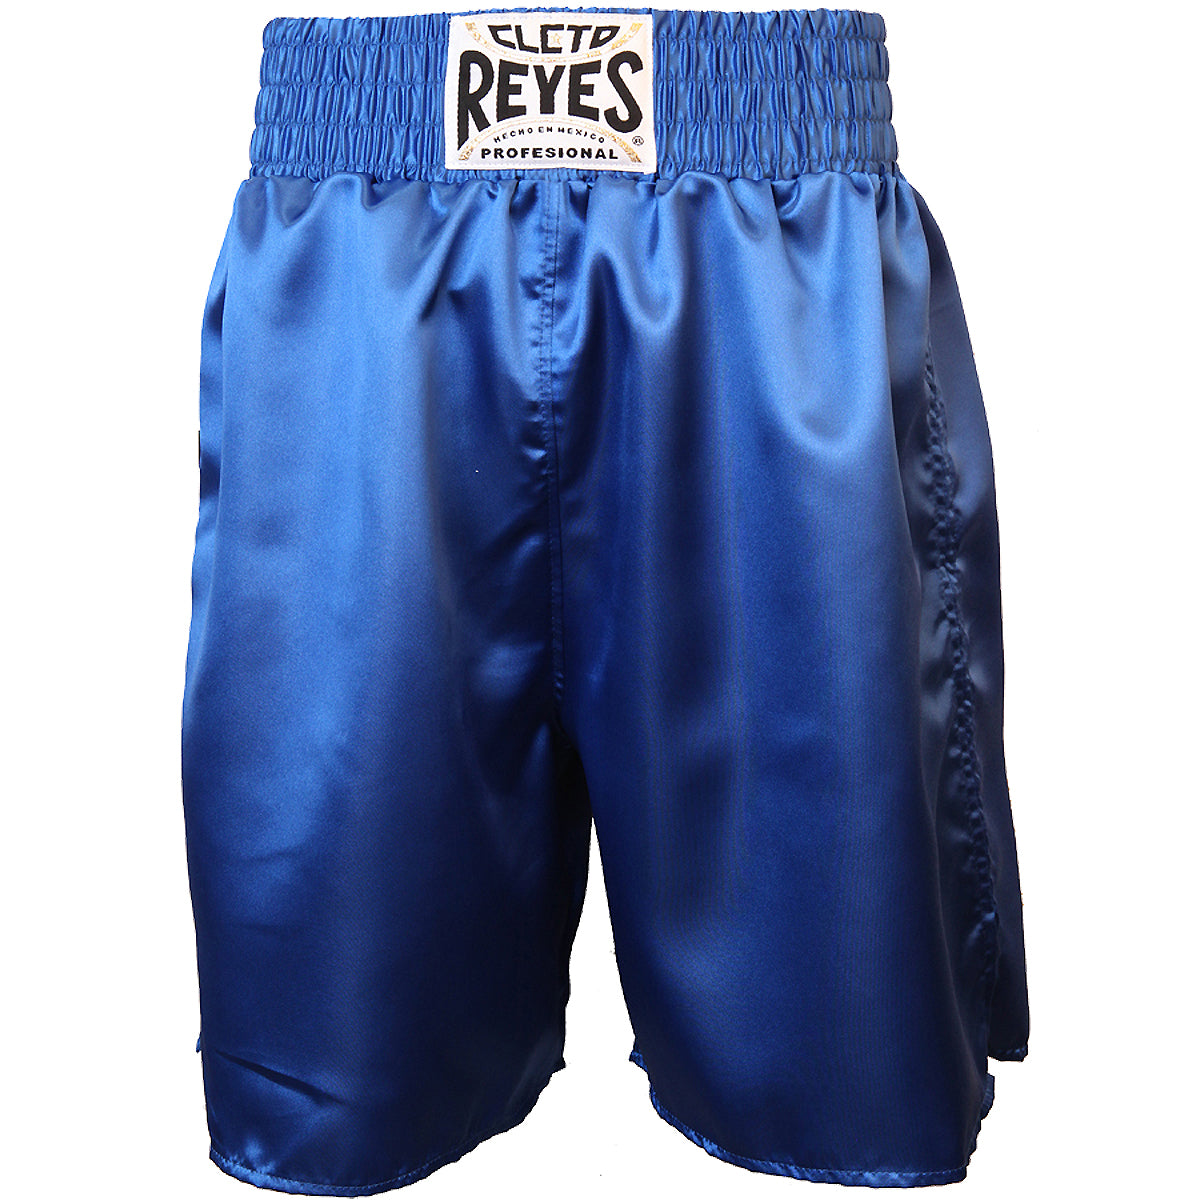 Cleto Reyes Satin Classic Boxing Trunks - Medium (36") - Blue Cleto Reyes